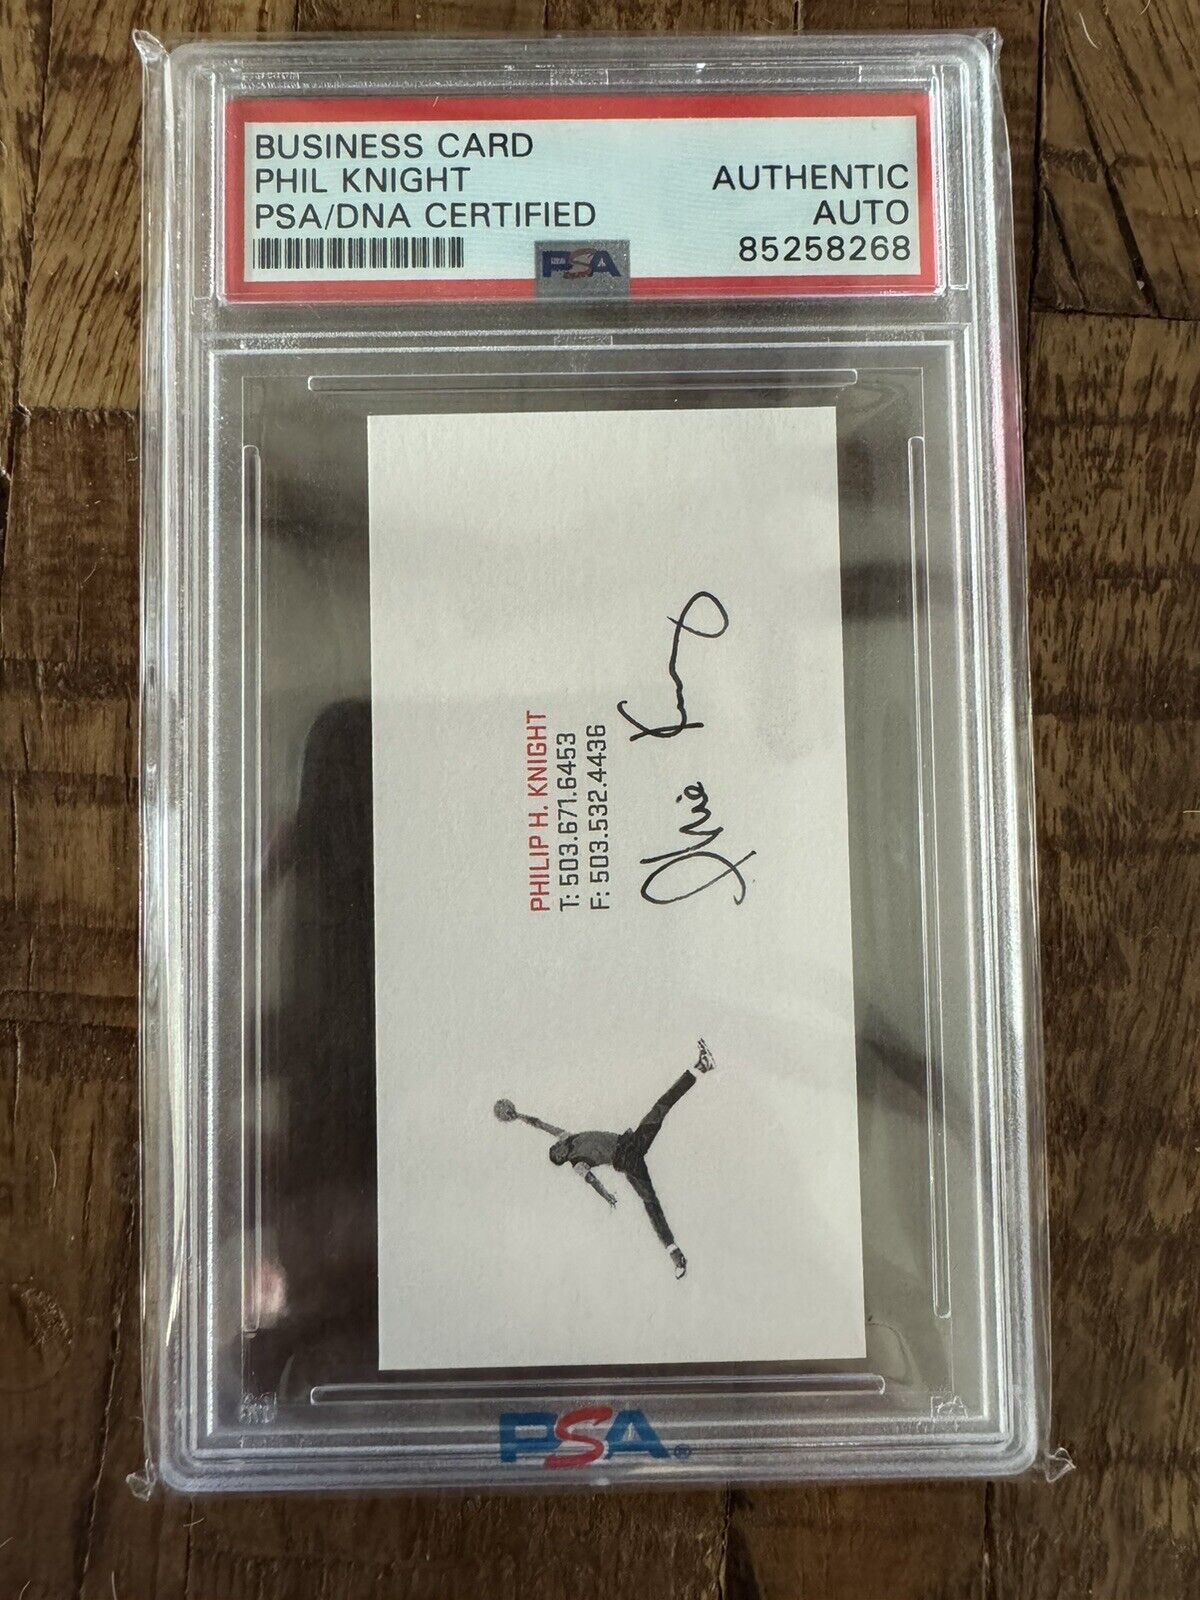 PHIL KNIGHT PSA DNA Autograph Signed Nike Business Card Jordan Jumpman Logo RARE